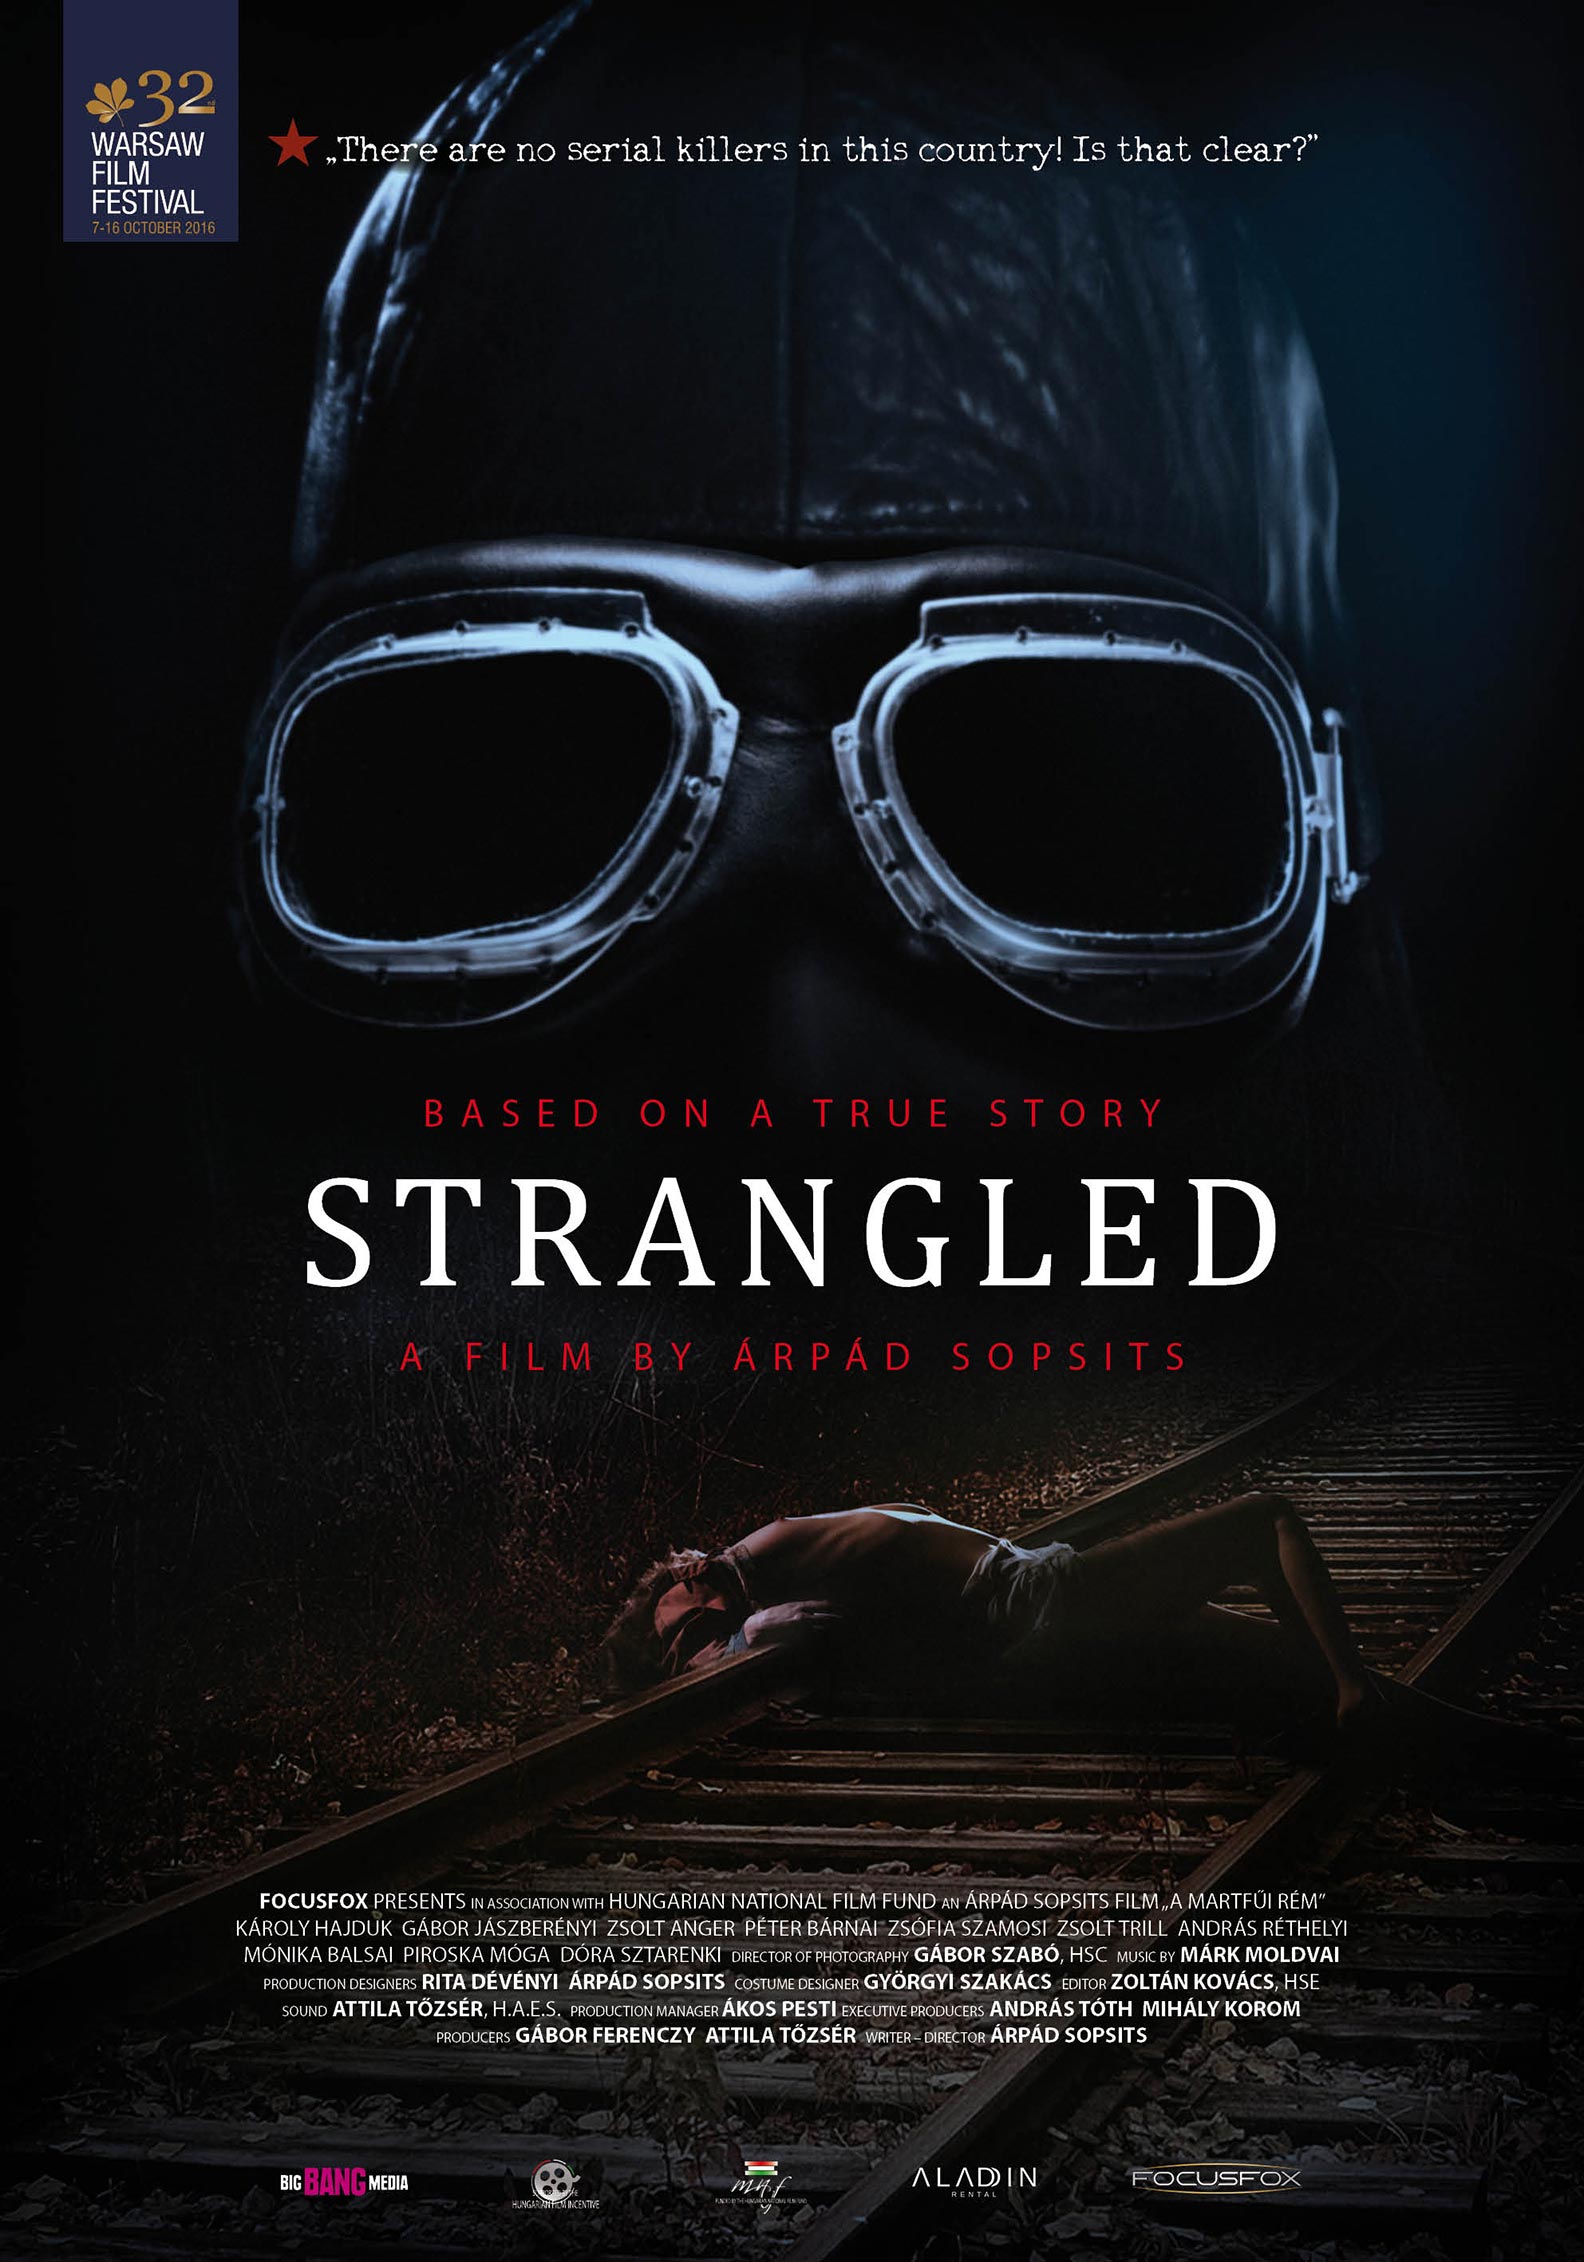 Strangled (2016) คดีฆ่ารัดคอ